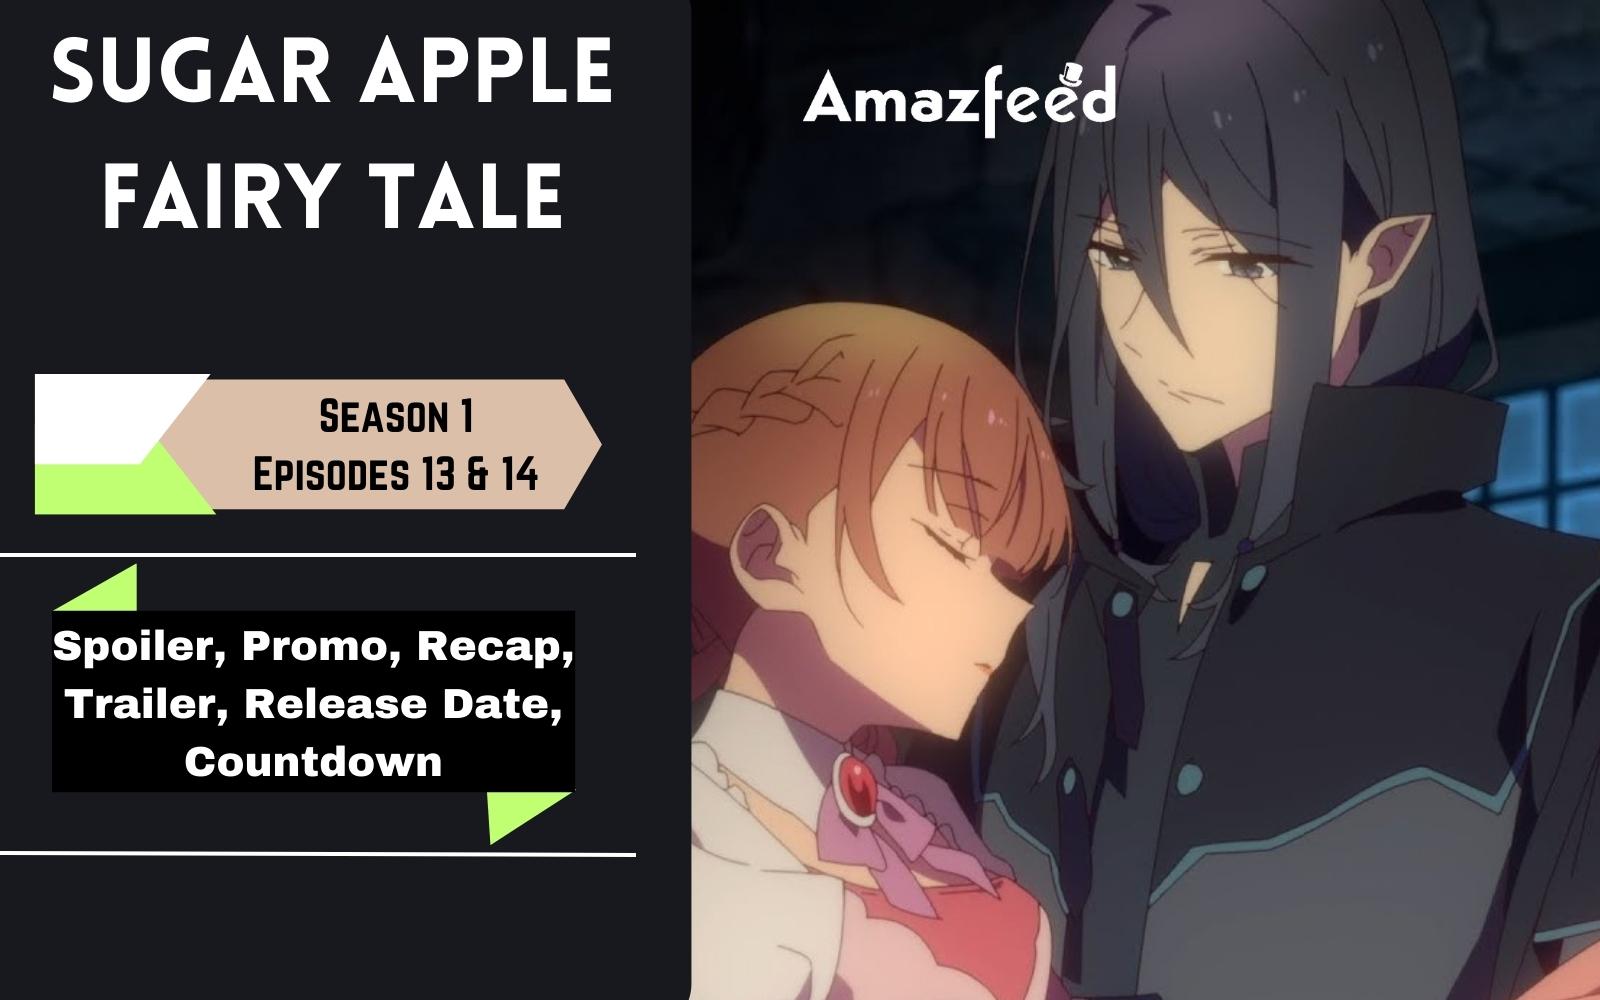 Episodes 13-14 - Sugar Apple Fairy Tale Season 2 - Anime News